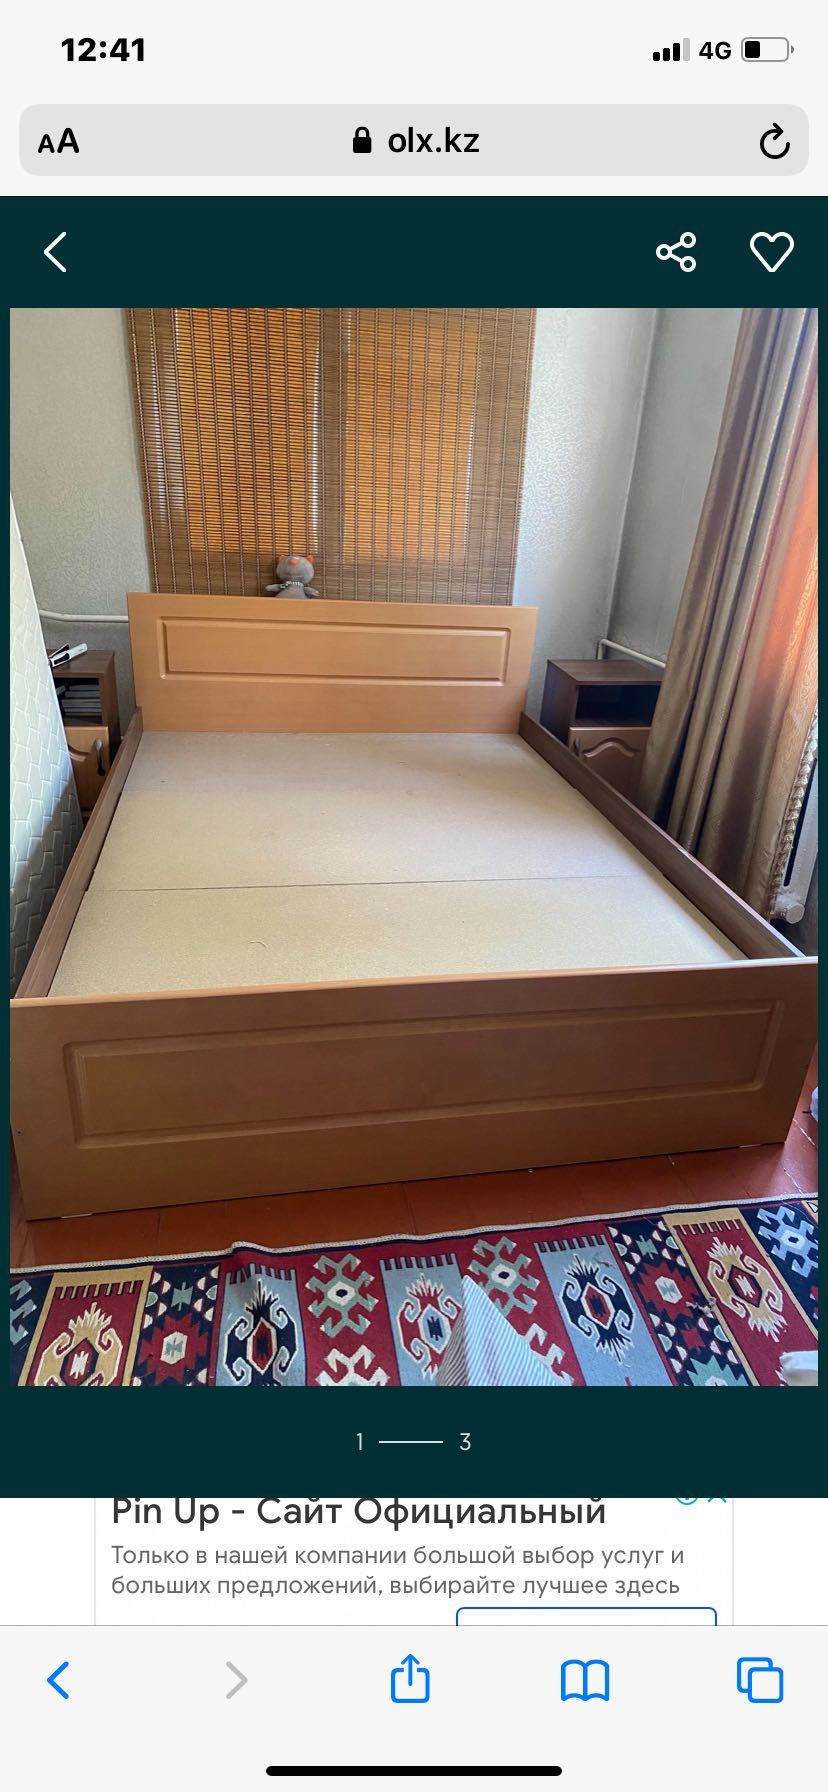 Продам 2-спальнюю кровать без матраца